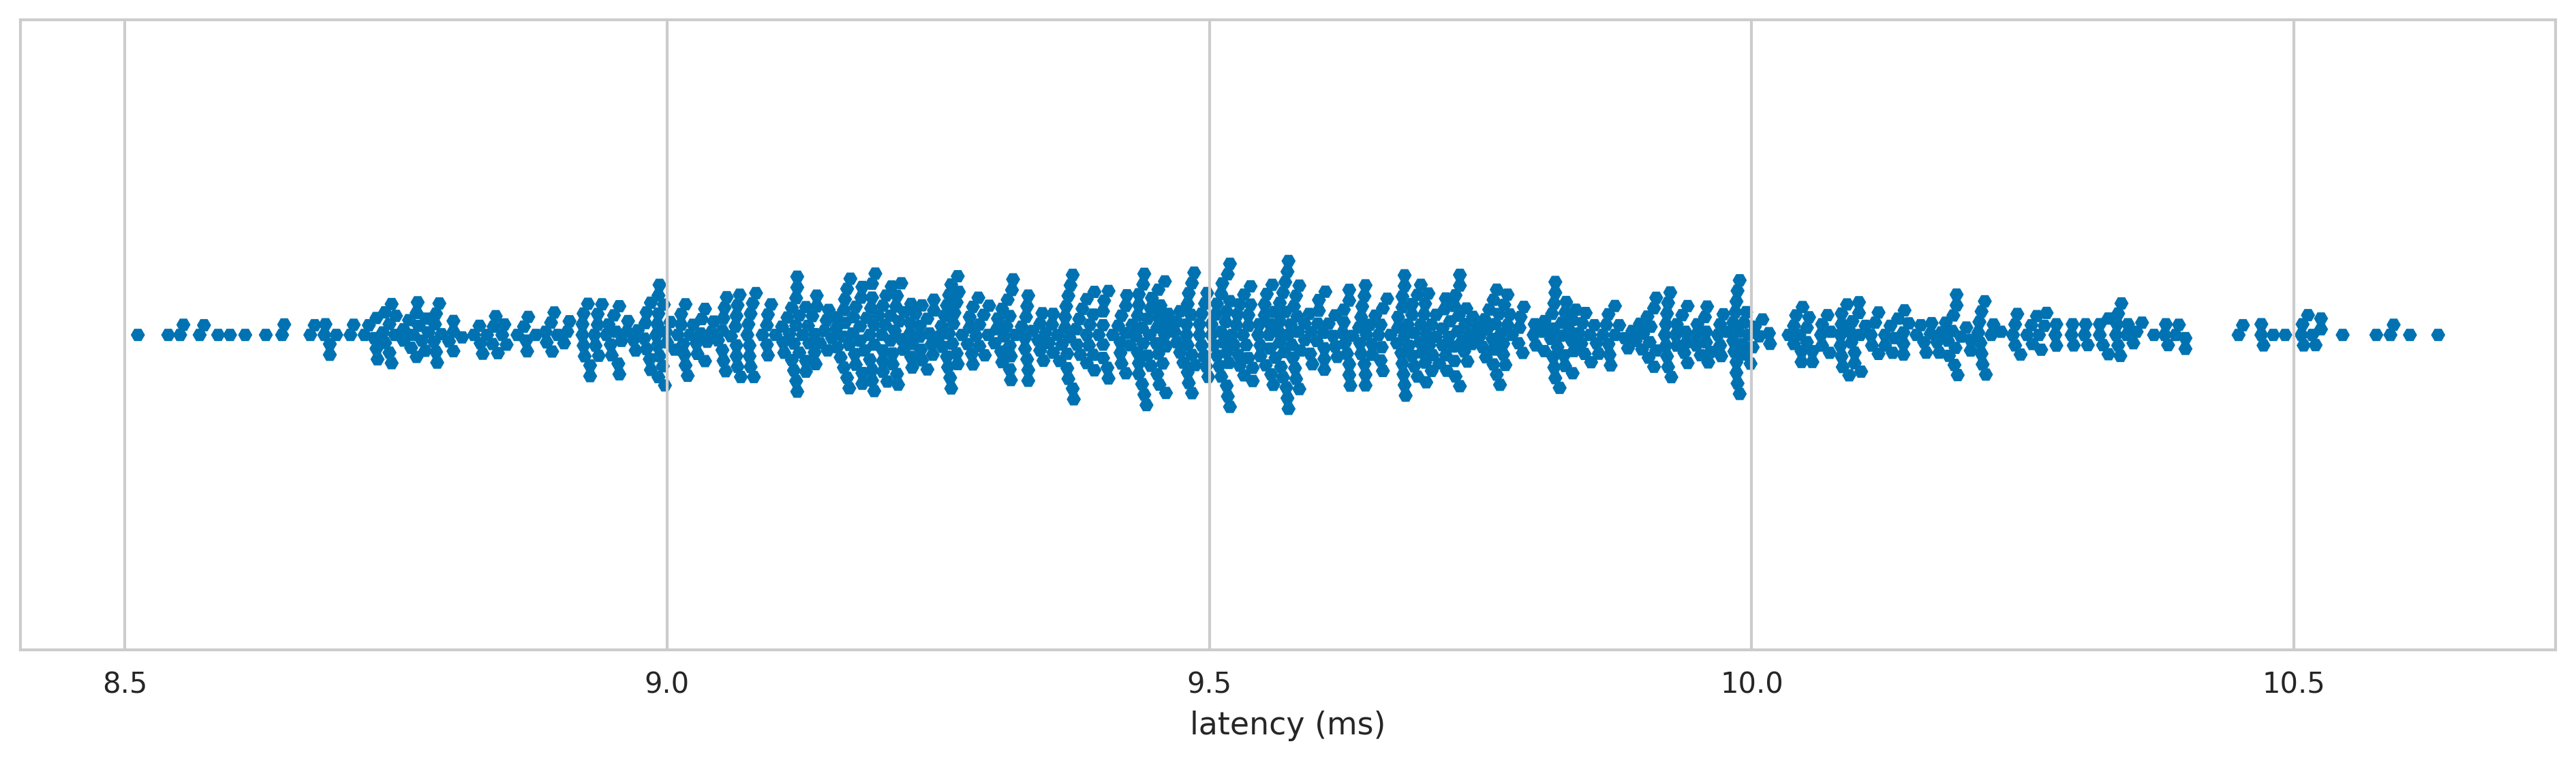 Roccat ISKU FX latency distribution 